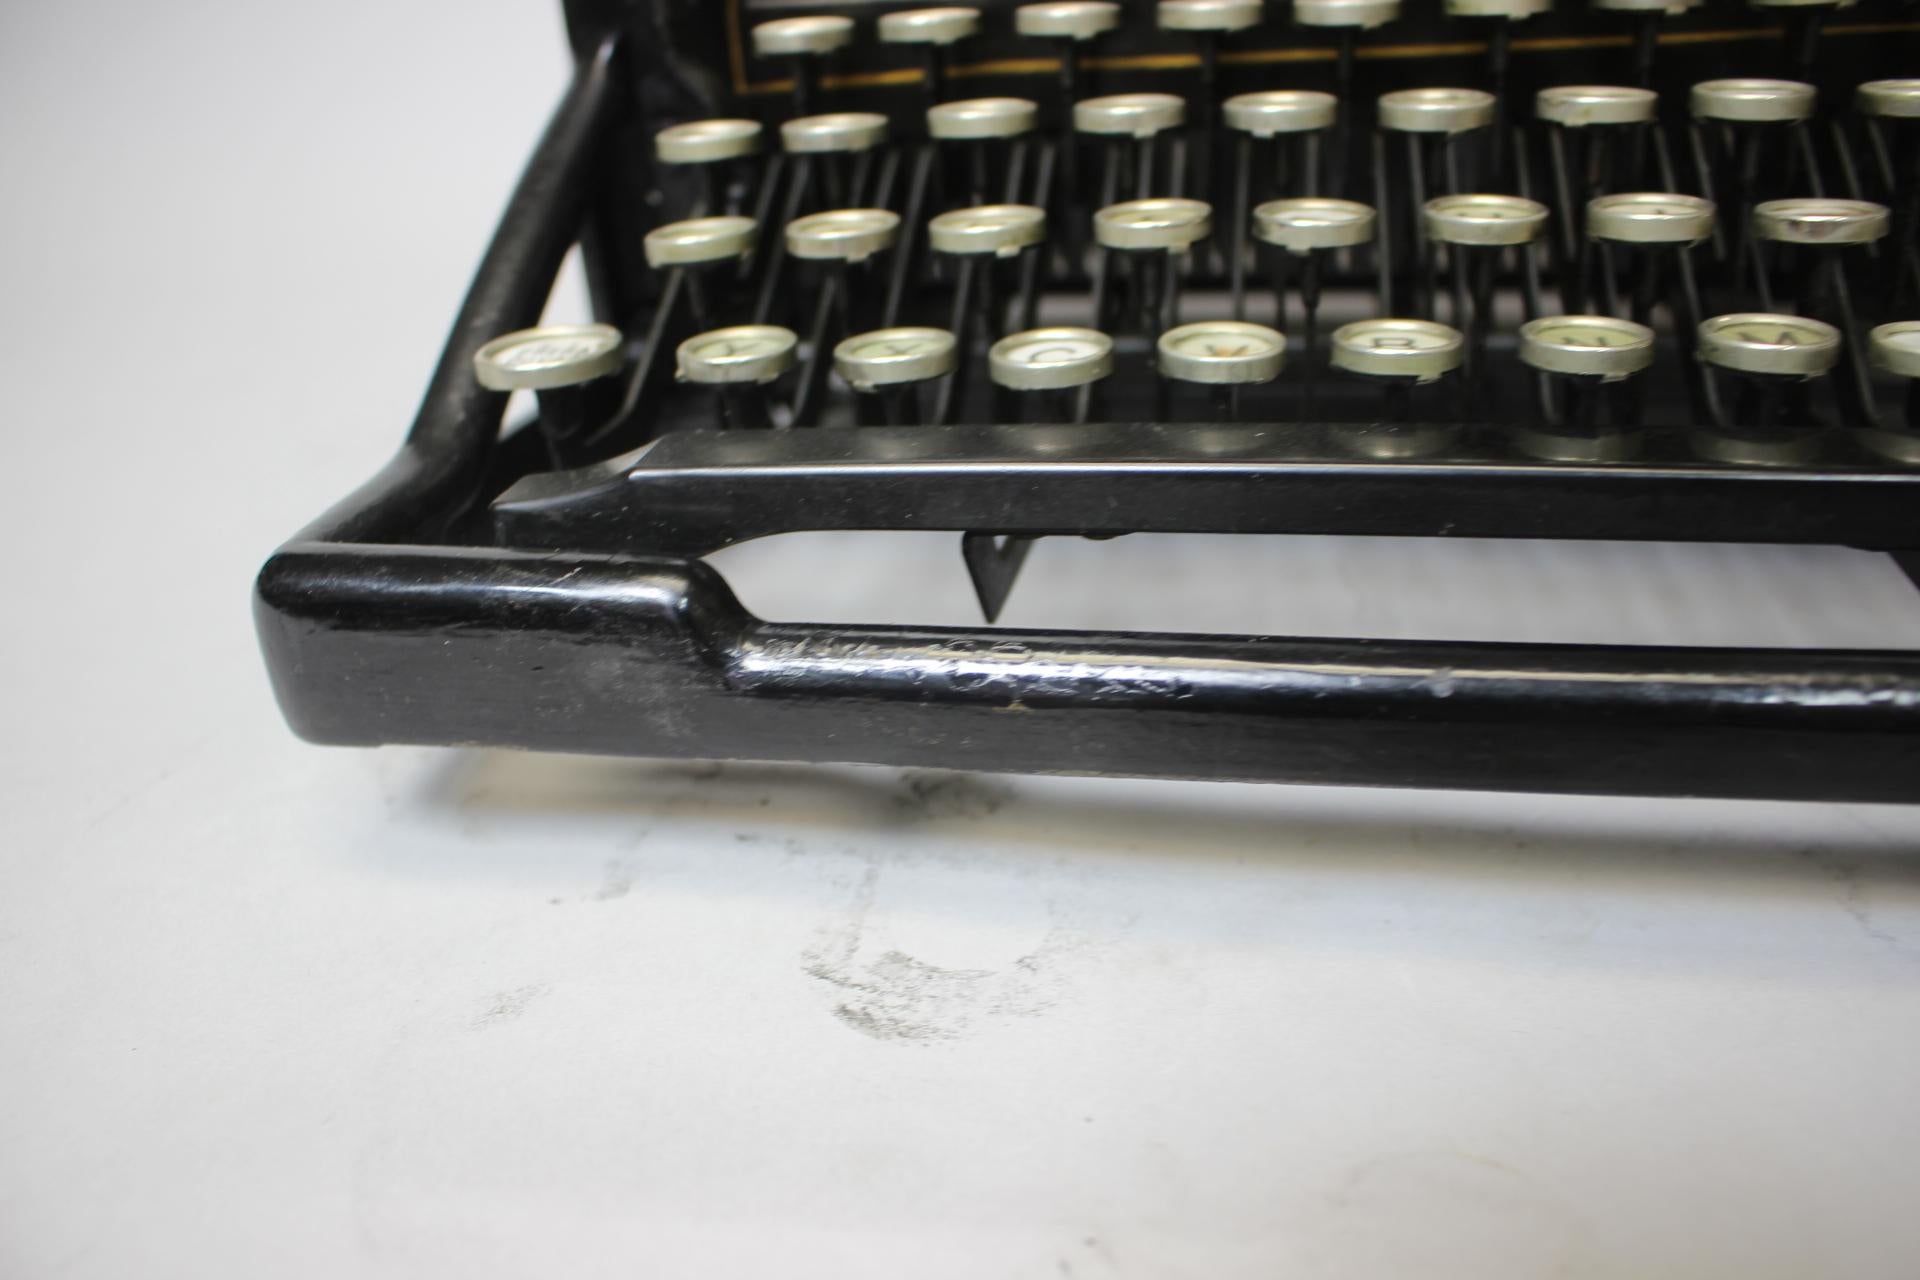 antique underwood typewriter value